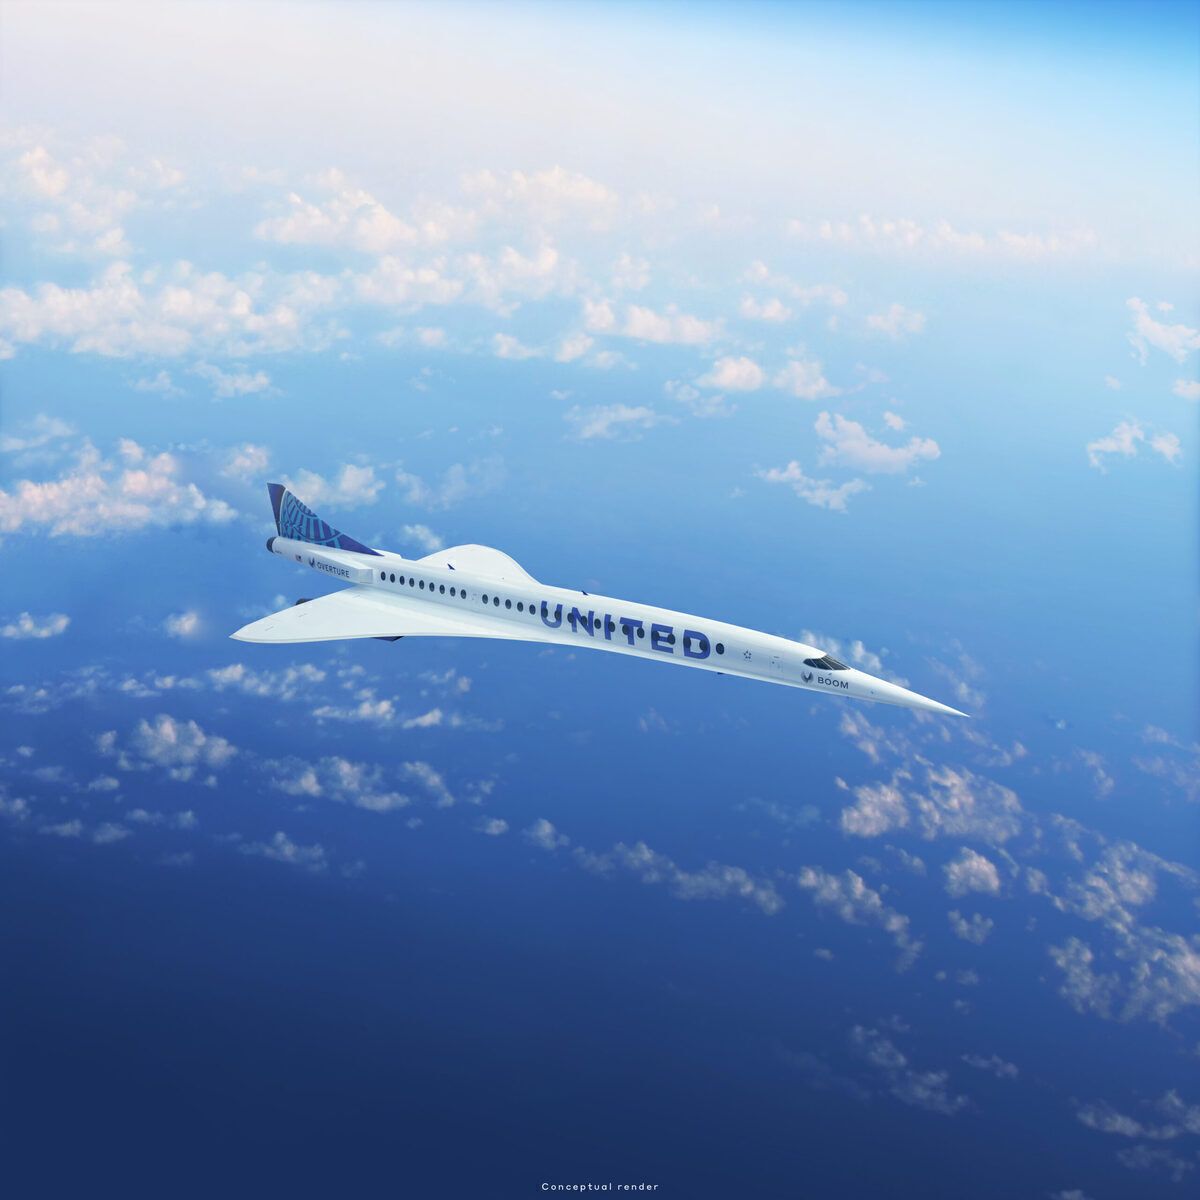 Boom Overture: Concorde's Successor 